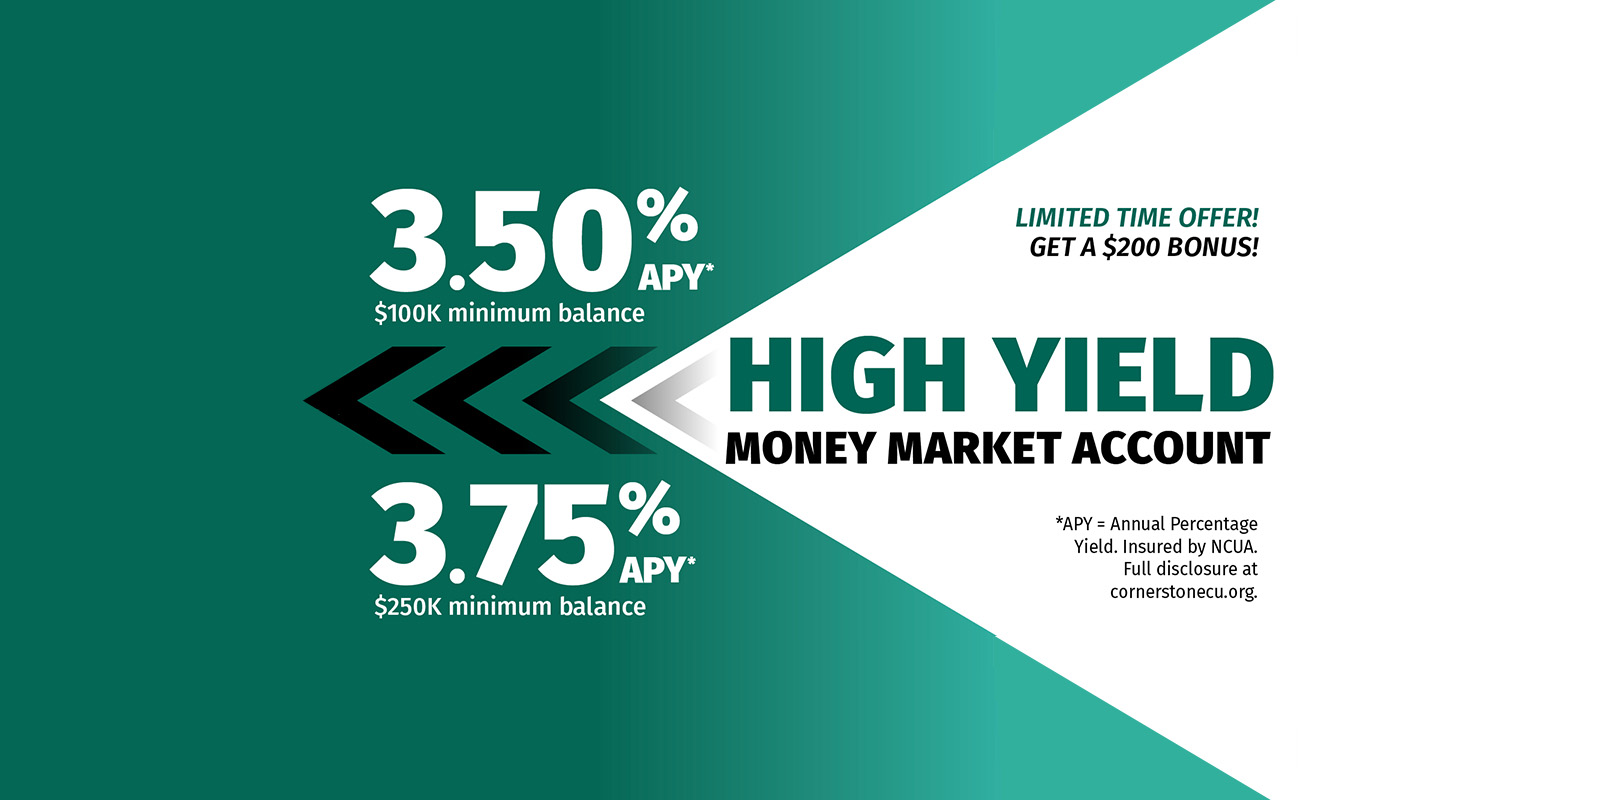 High Yield Money Market Account. 2.25% APY $100k minimum balance. 3.10% APY $500k minimum balance. Get a $200 bonus